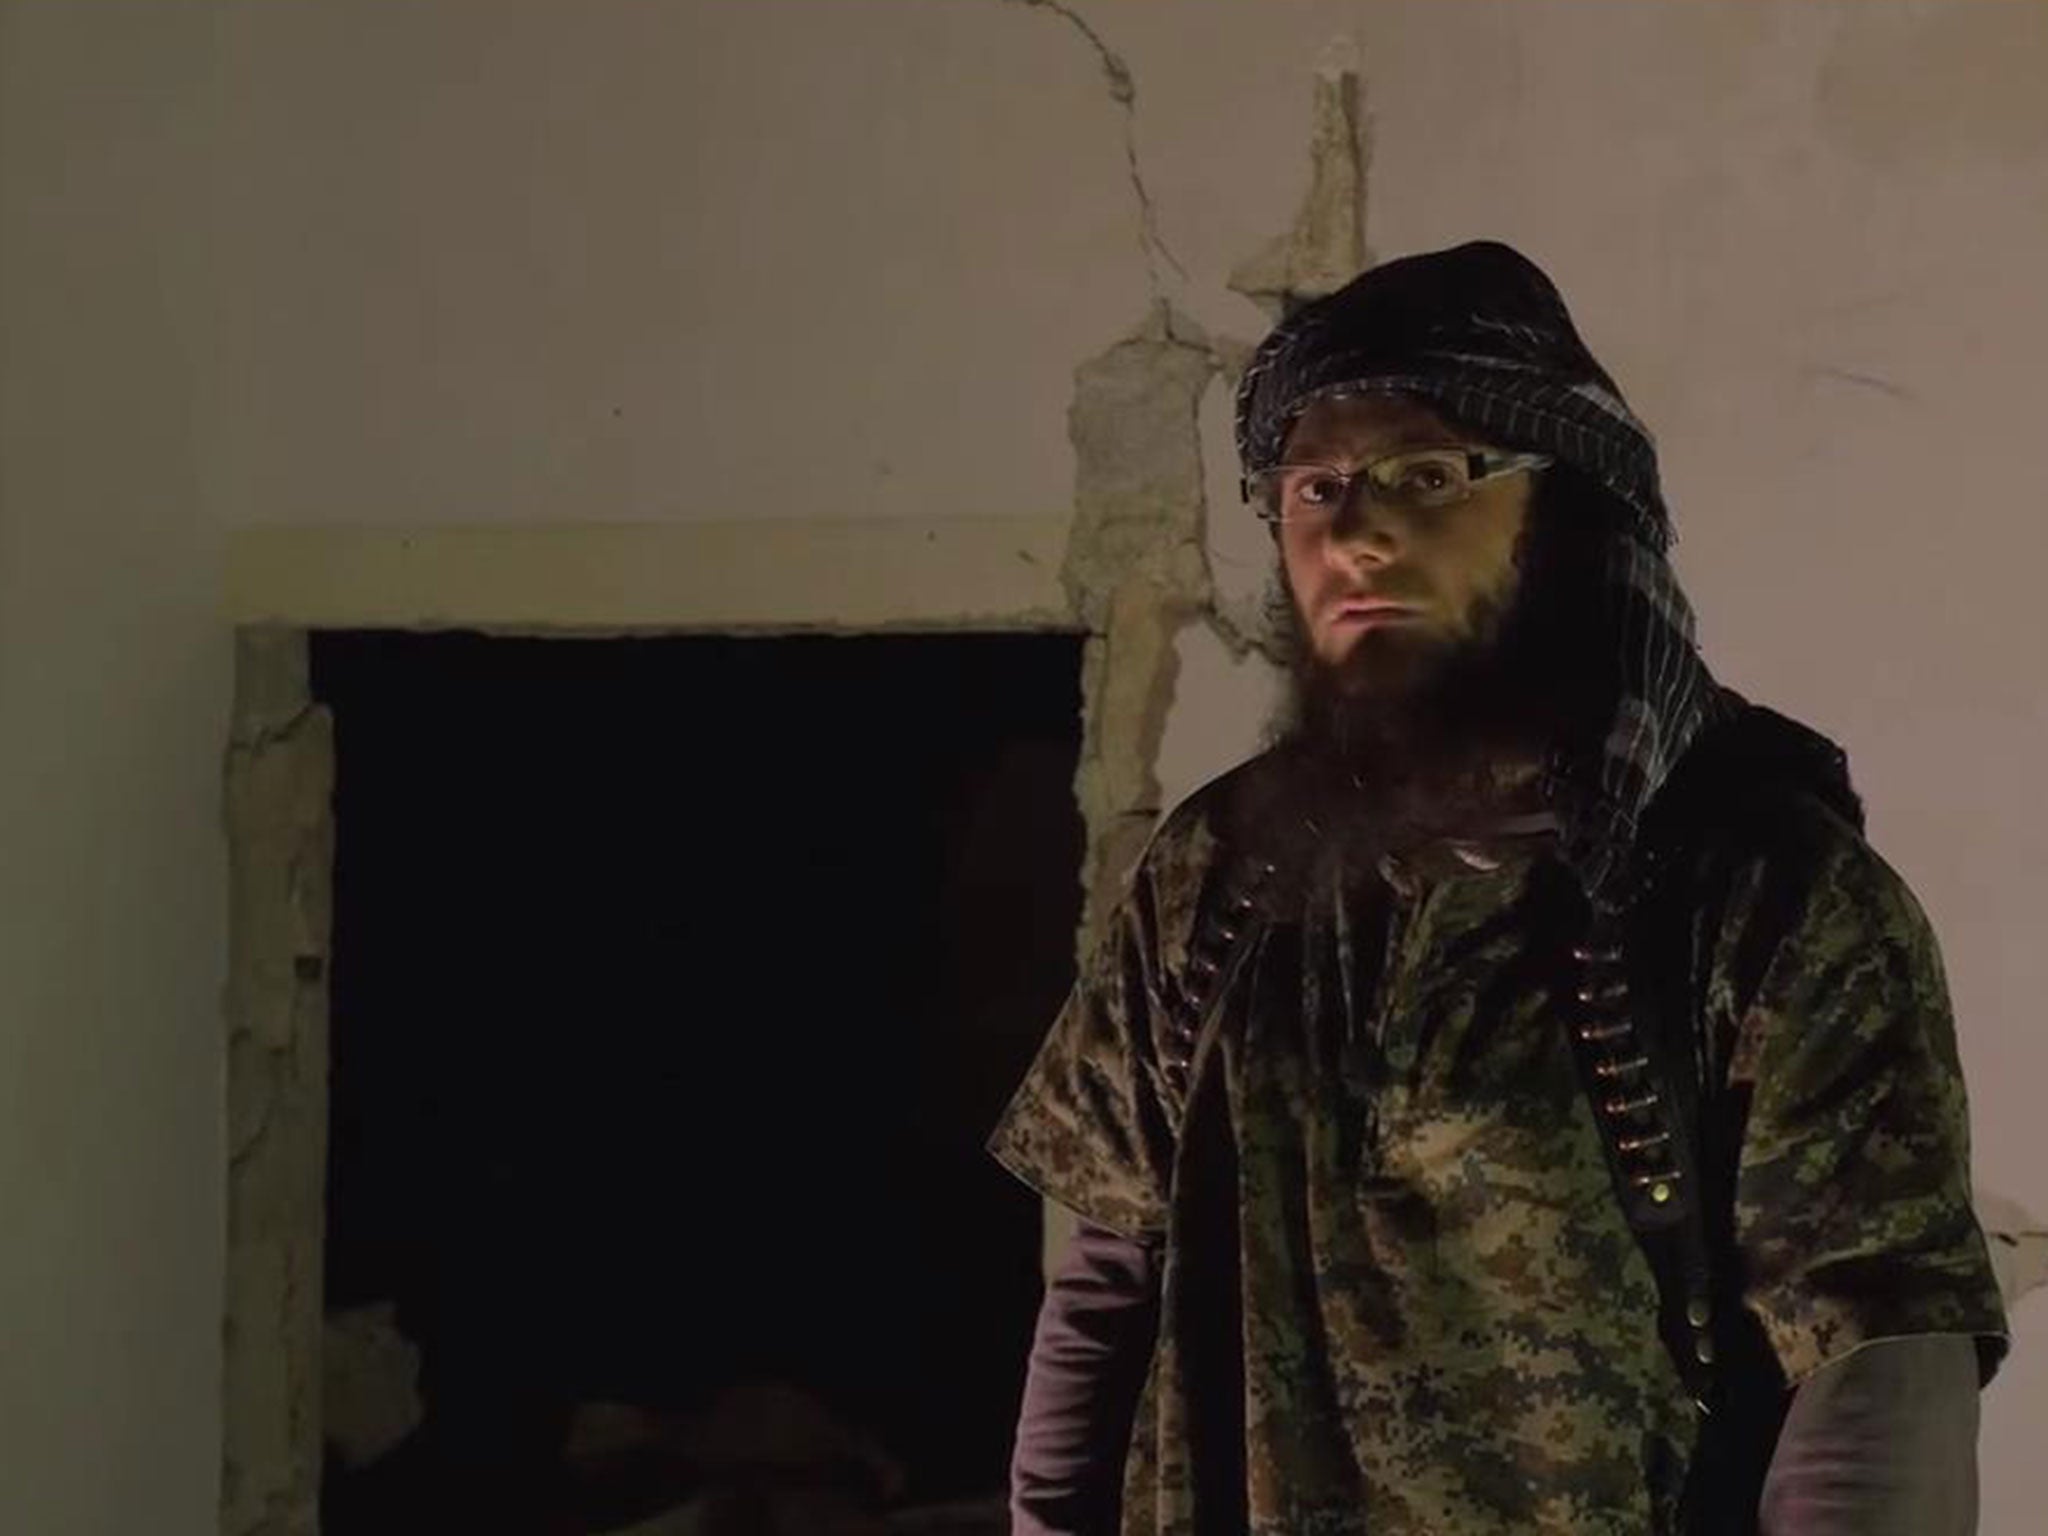 Lucas Kinney is fighting for Jabhat al-Nusra in Syria under the name Abu Basir Al-Britani